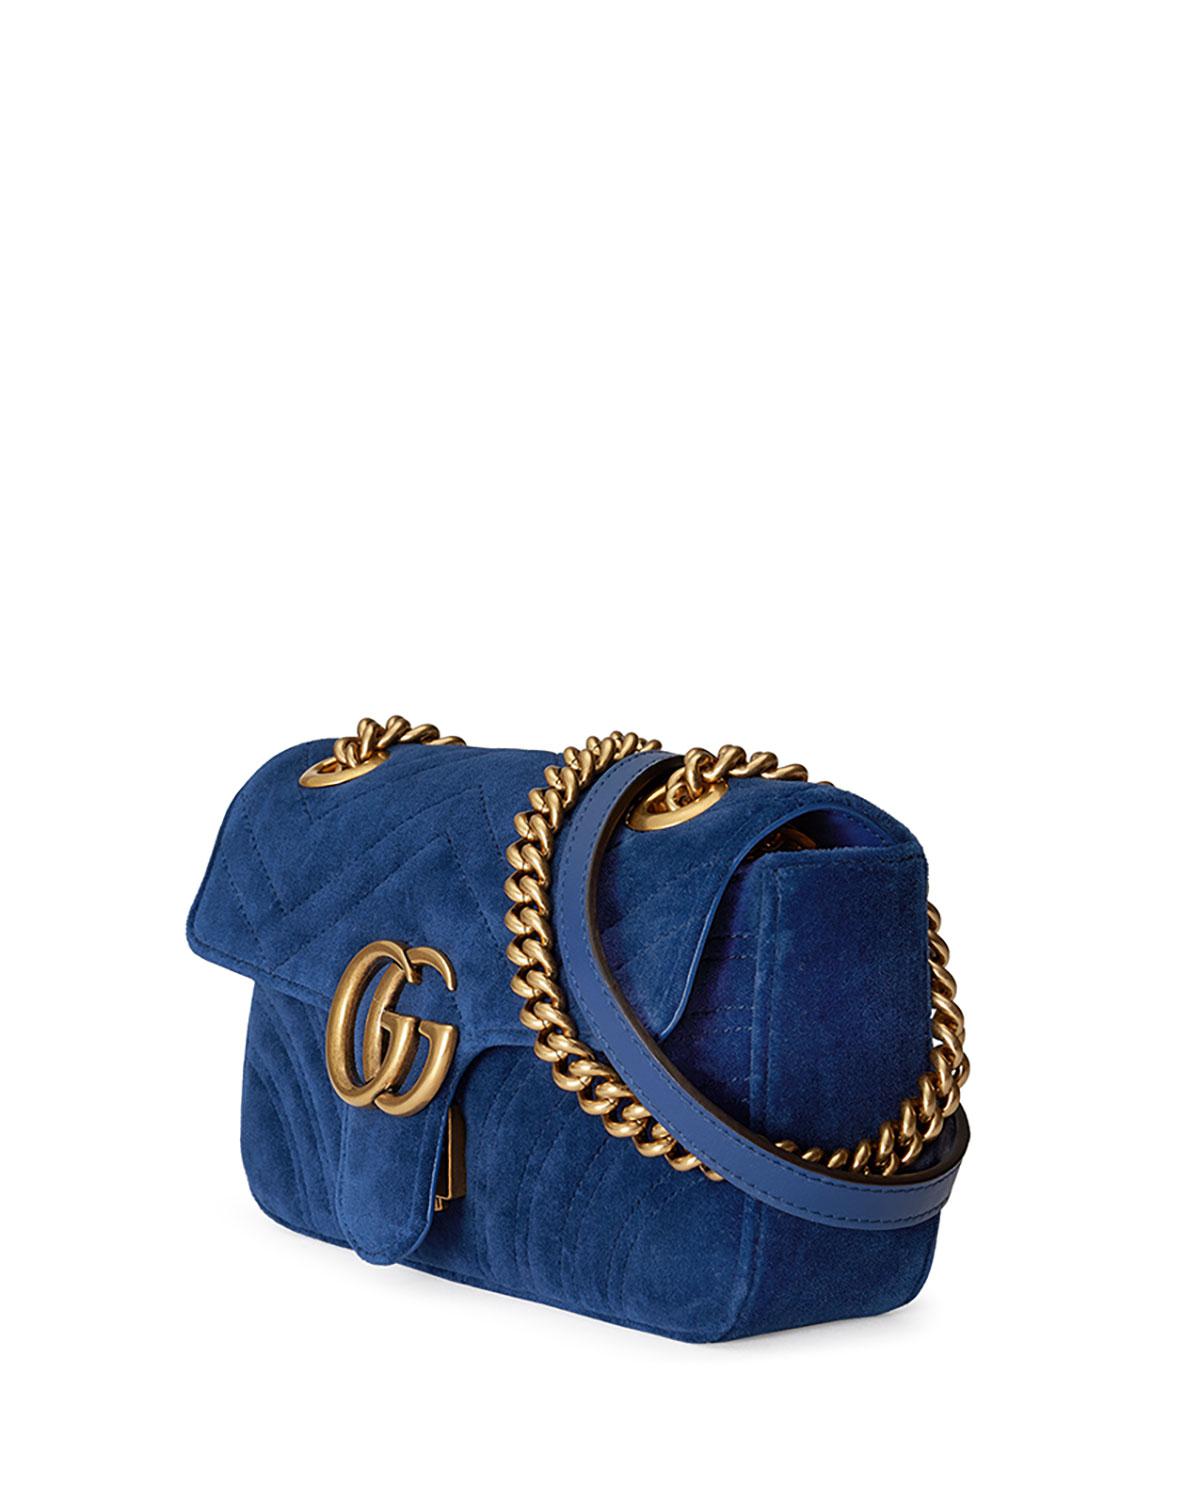 Gucci Gg Marmont 2.0 Suede Shoulder Bag - Lyst